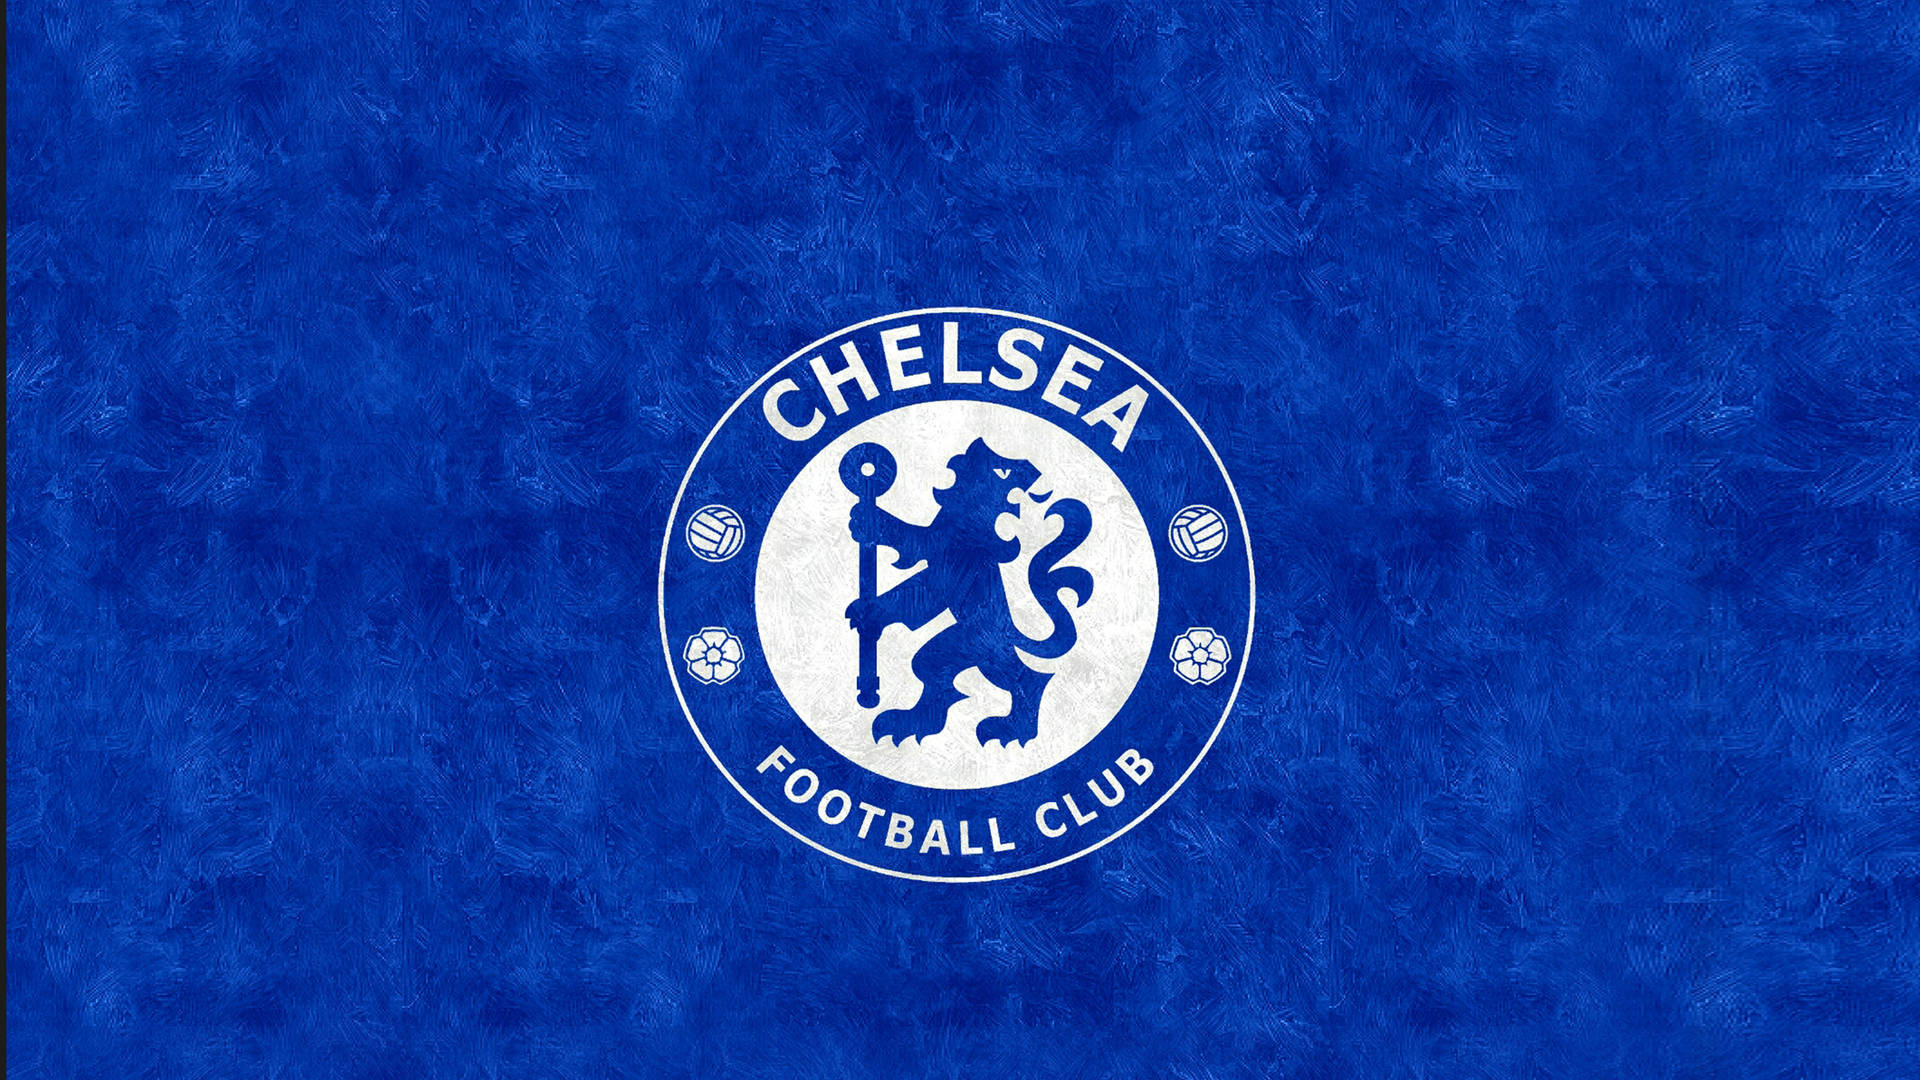 Chelsea Fc In Grunge Blue